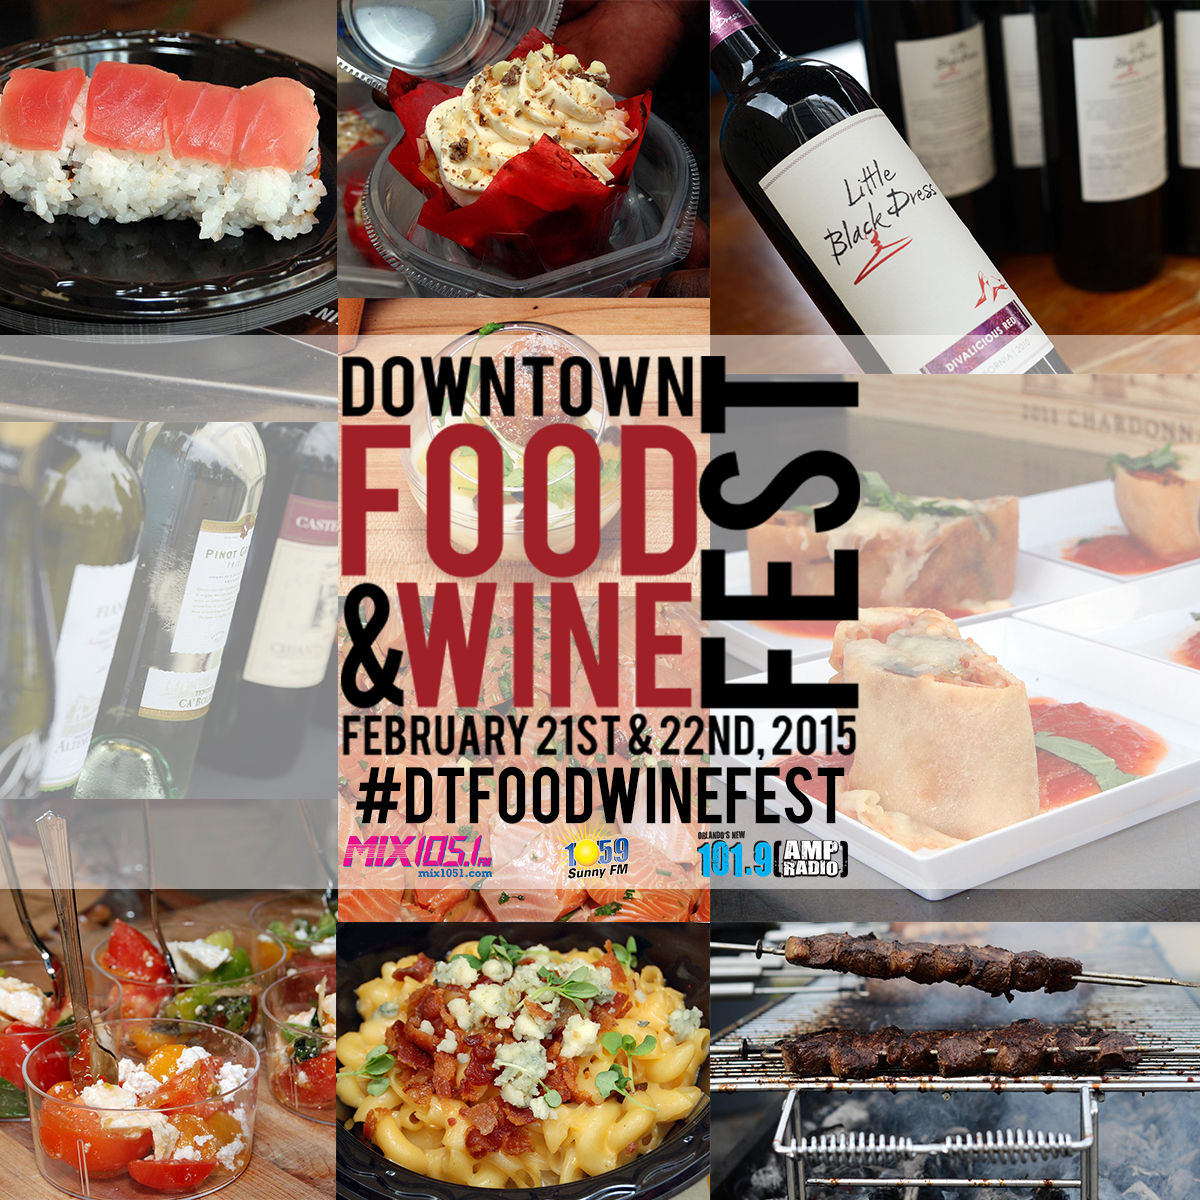 #Orlando Downtown Food & Wine Fest 2015 @DTFoodWineFest